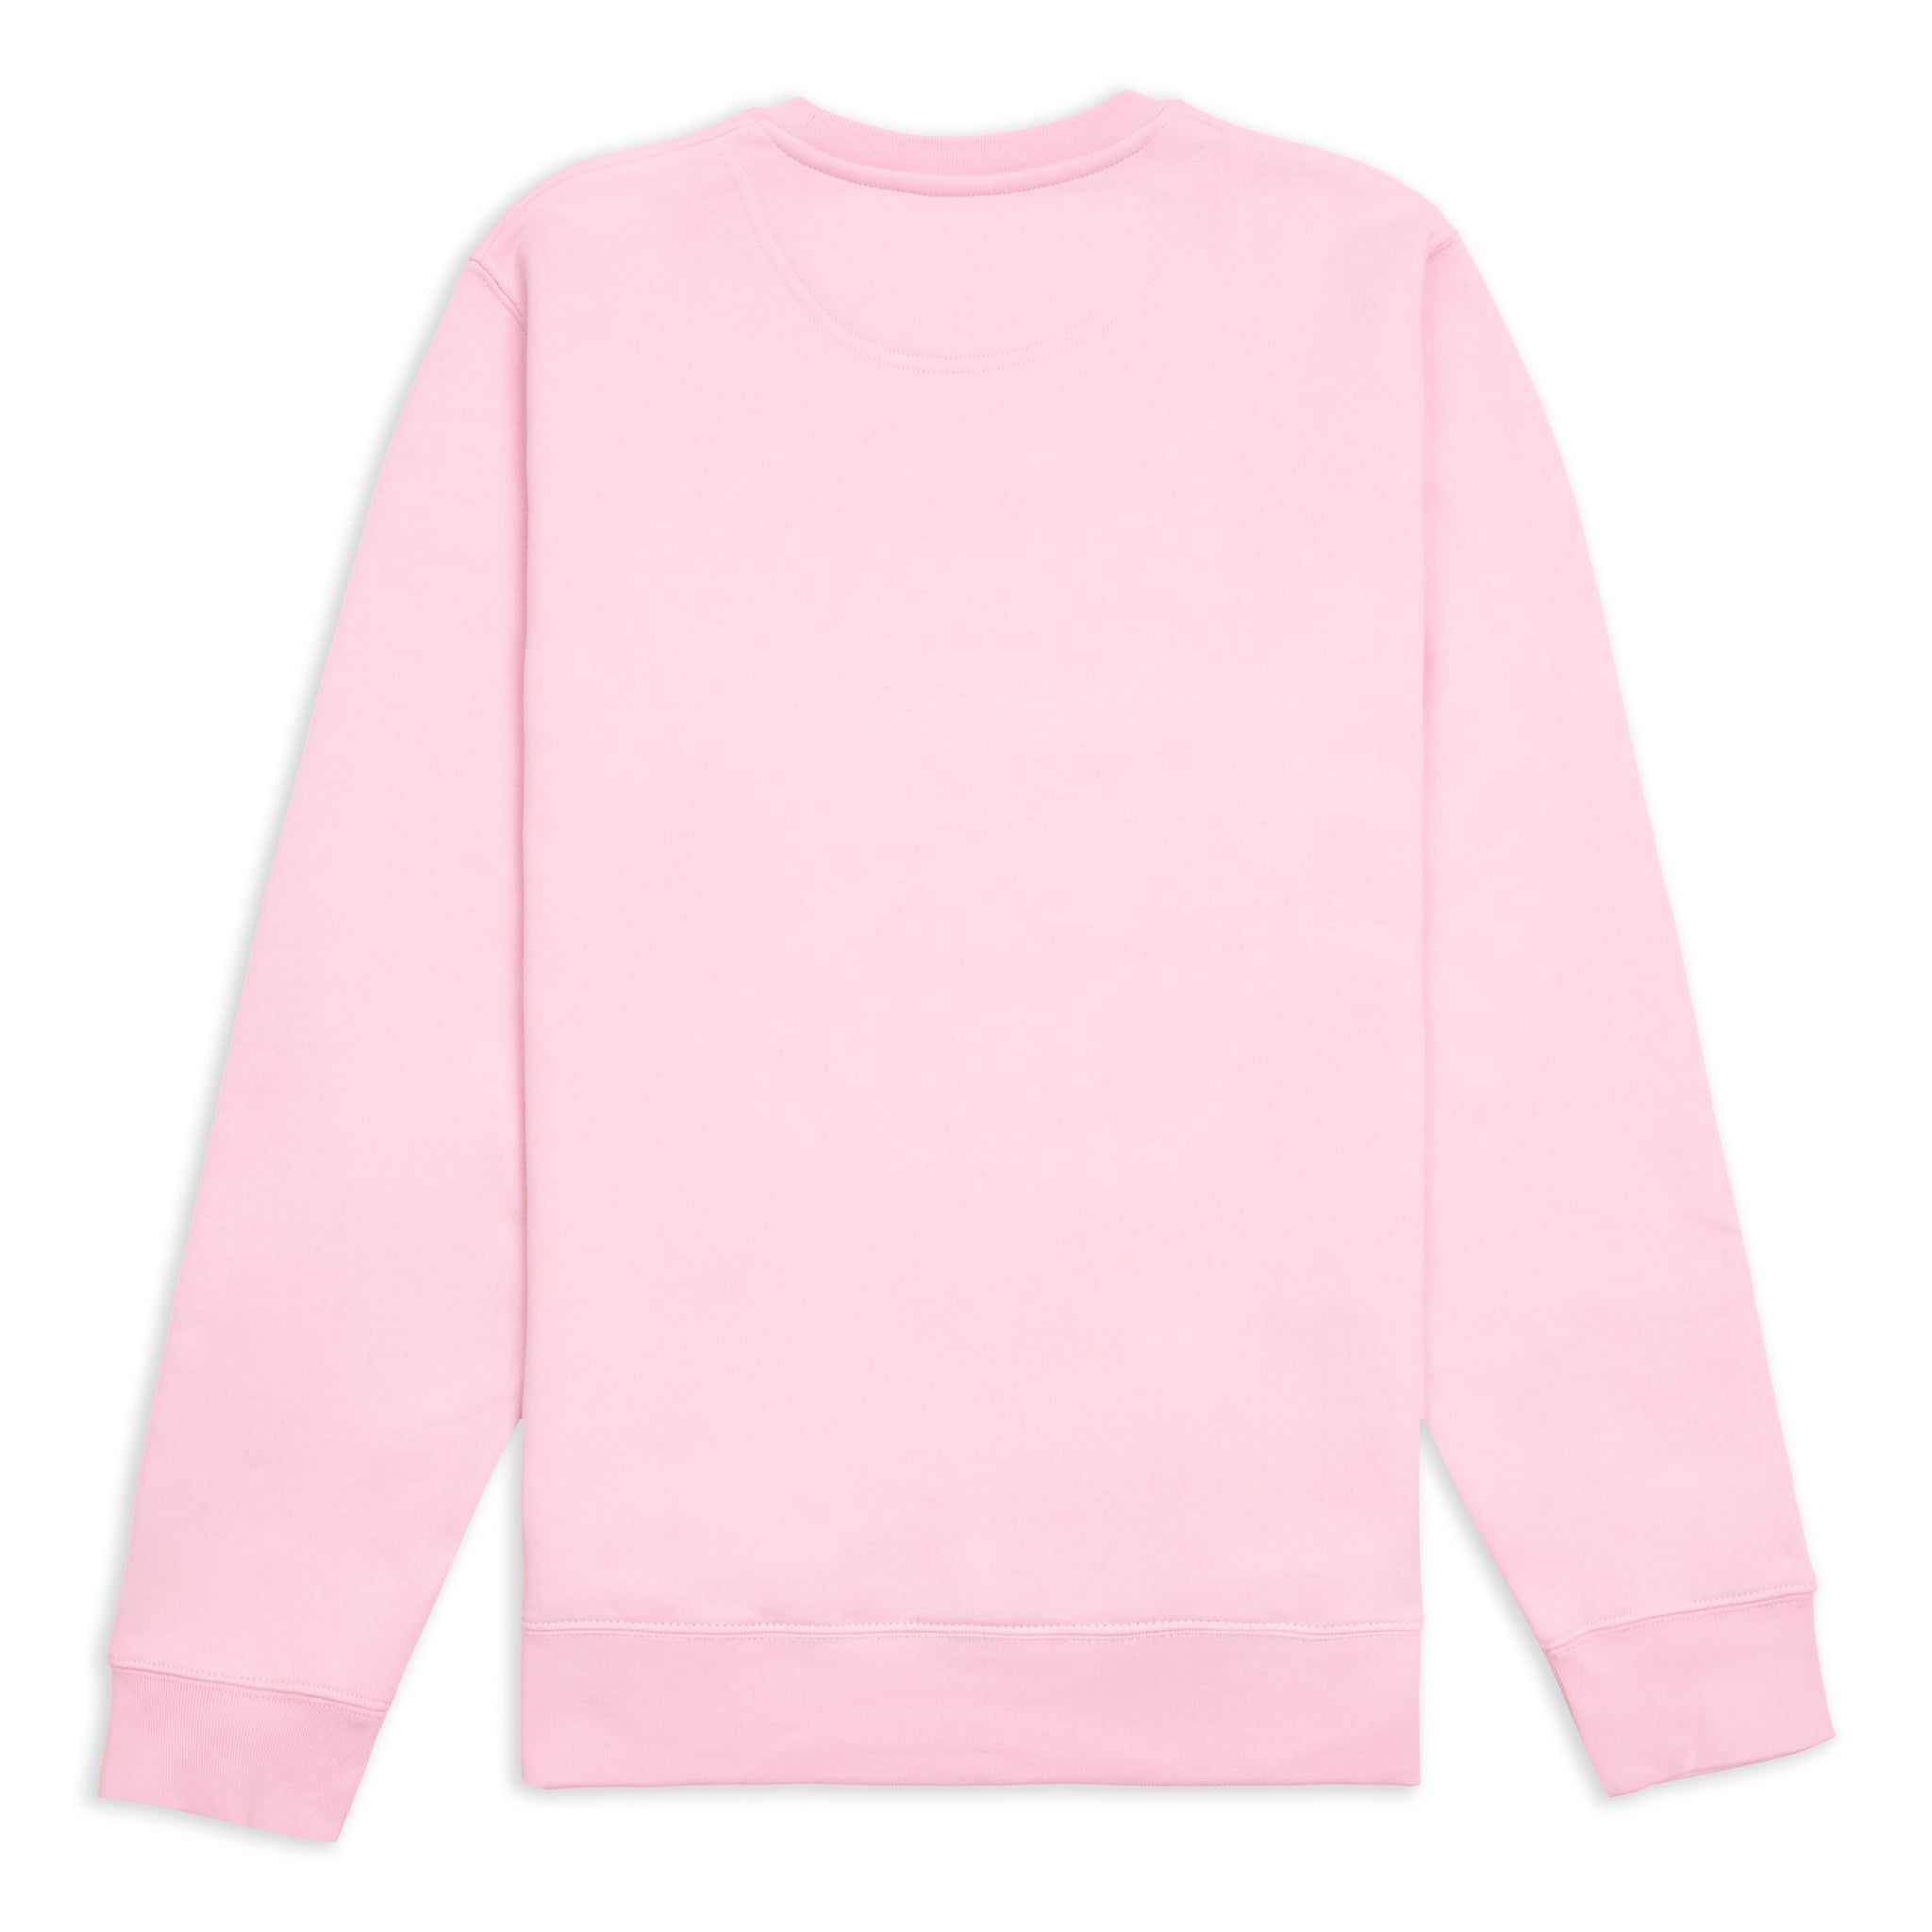 The Weakest Pink 30 Year™ Sweatshirt